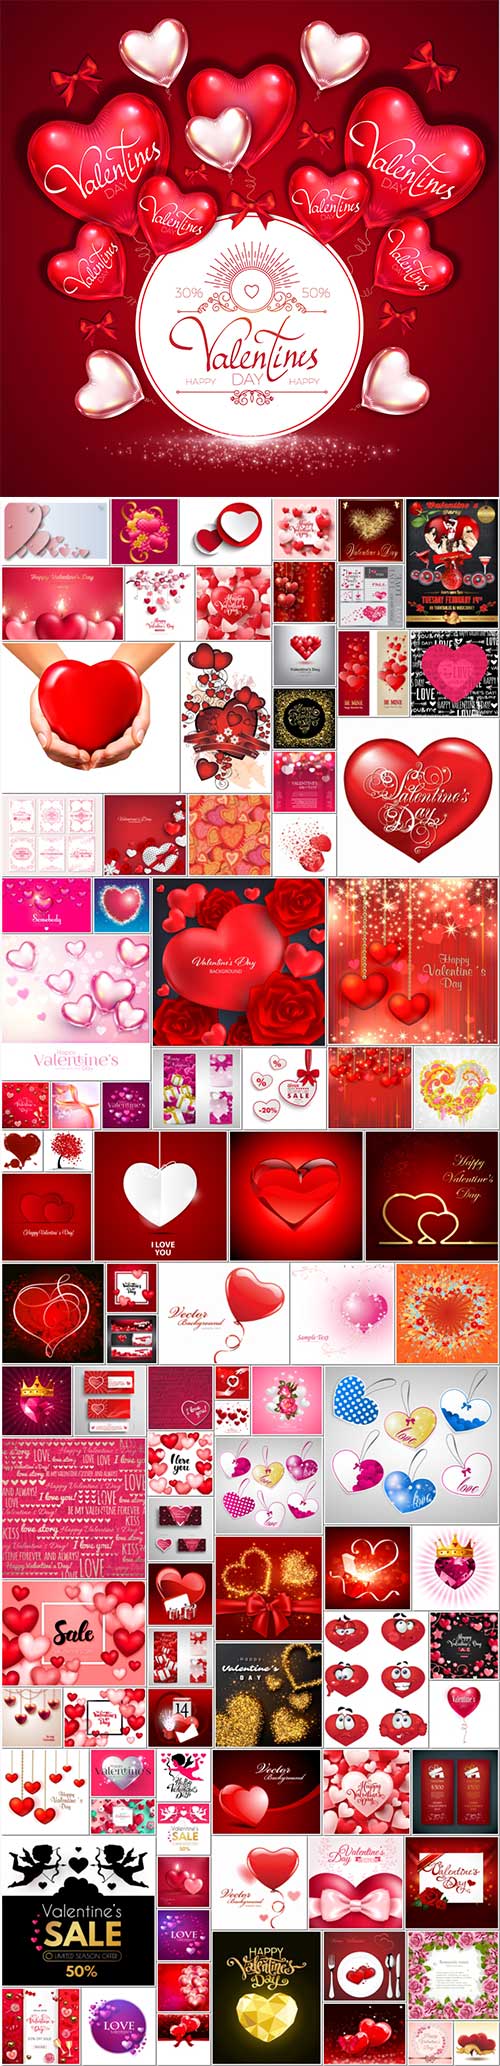 100 Bundle Happy Valentines Day, love, romance, hearts in vector vol 2